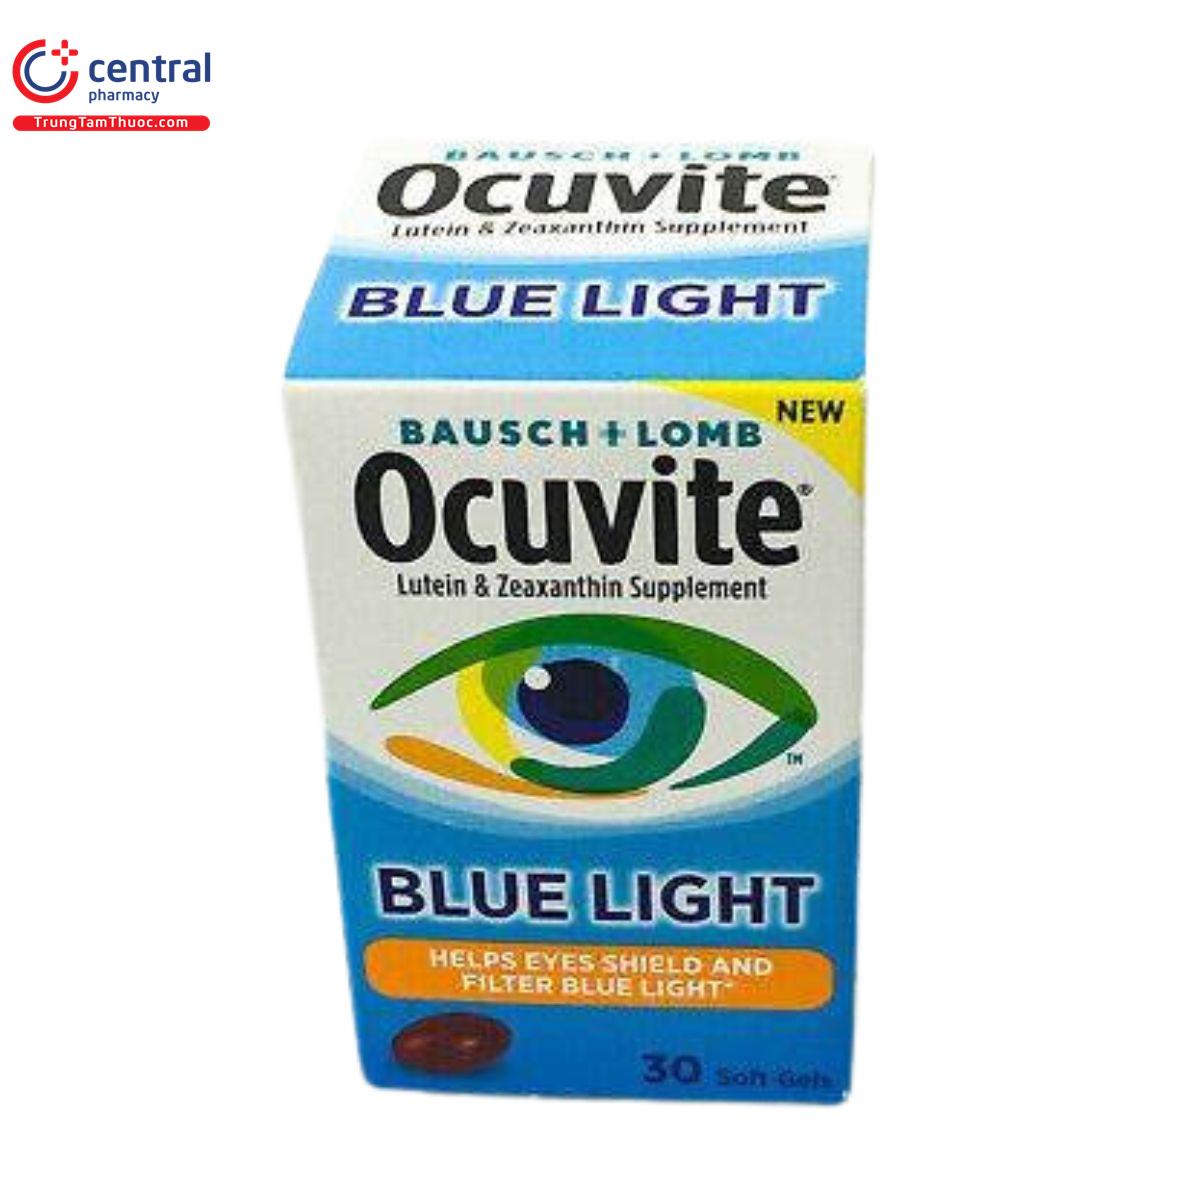 ocuvite blue light 2 Q6240